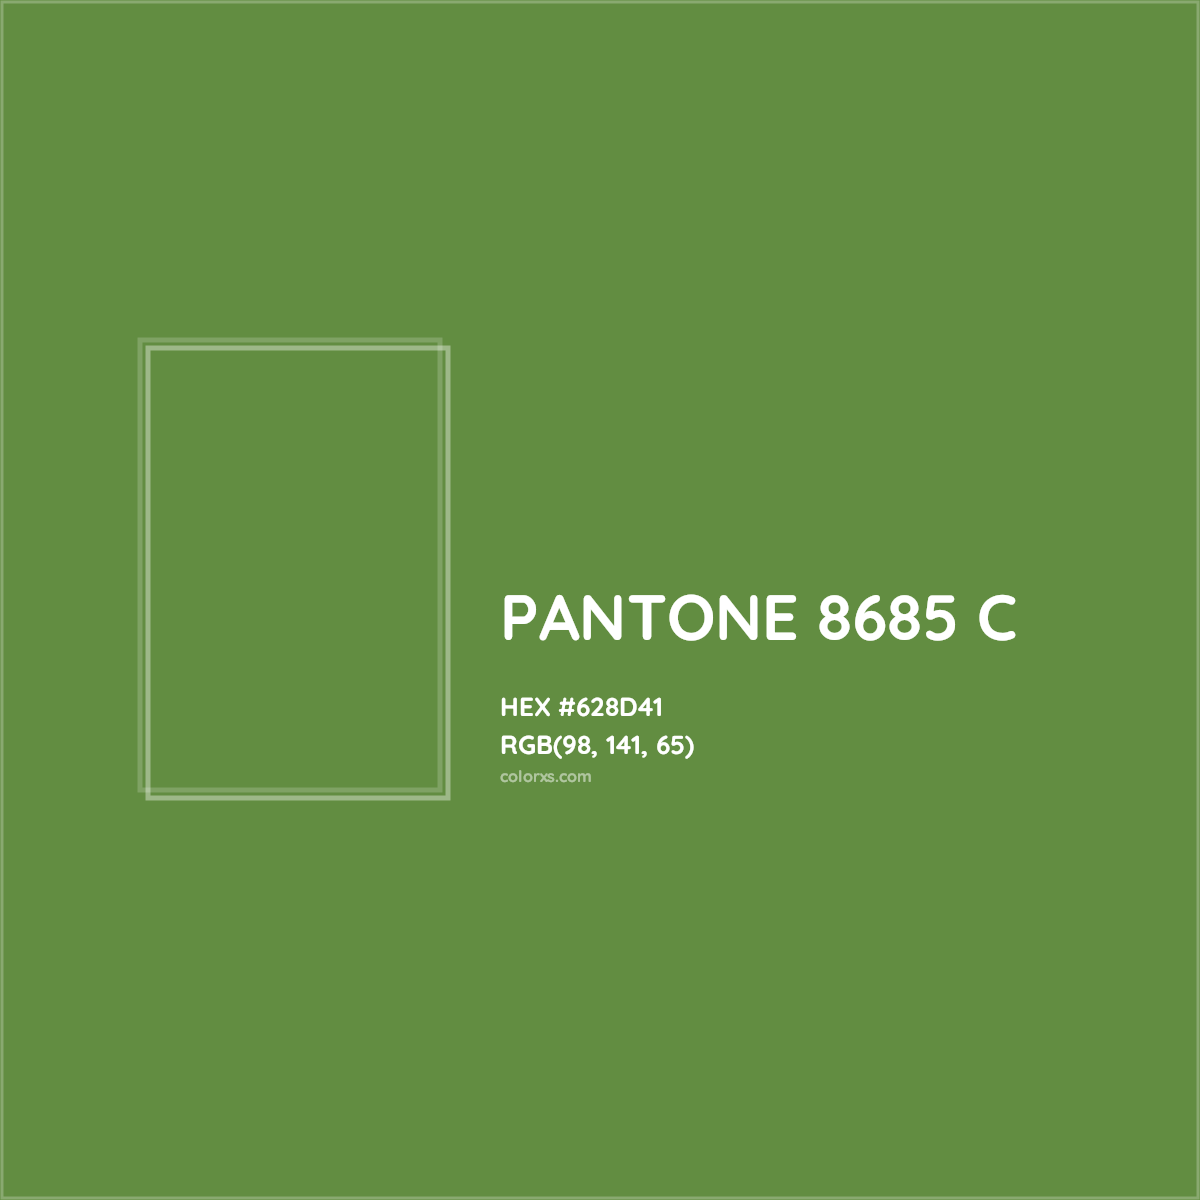 HEX #628D41 PANTONE 8685 C CMS Pantone PMS - Color Code